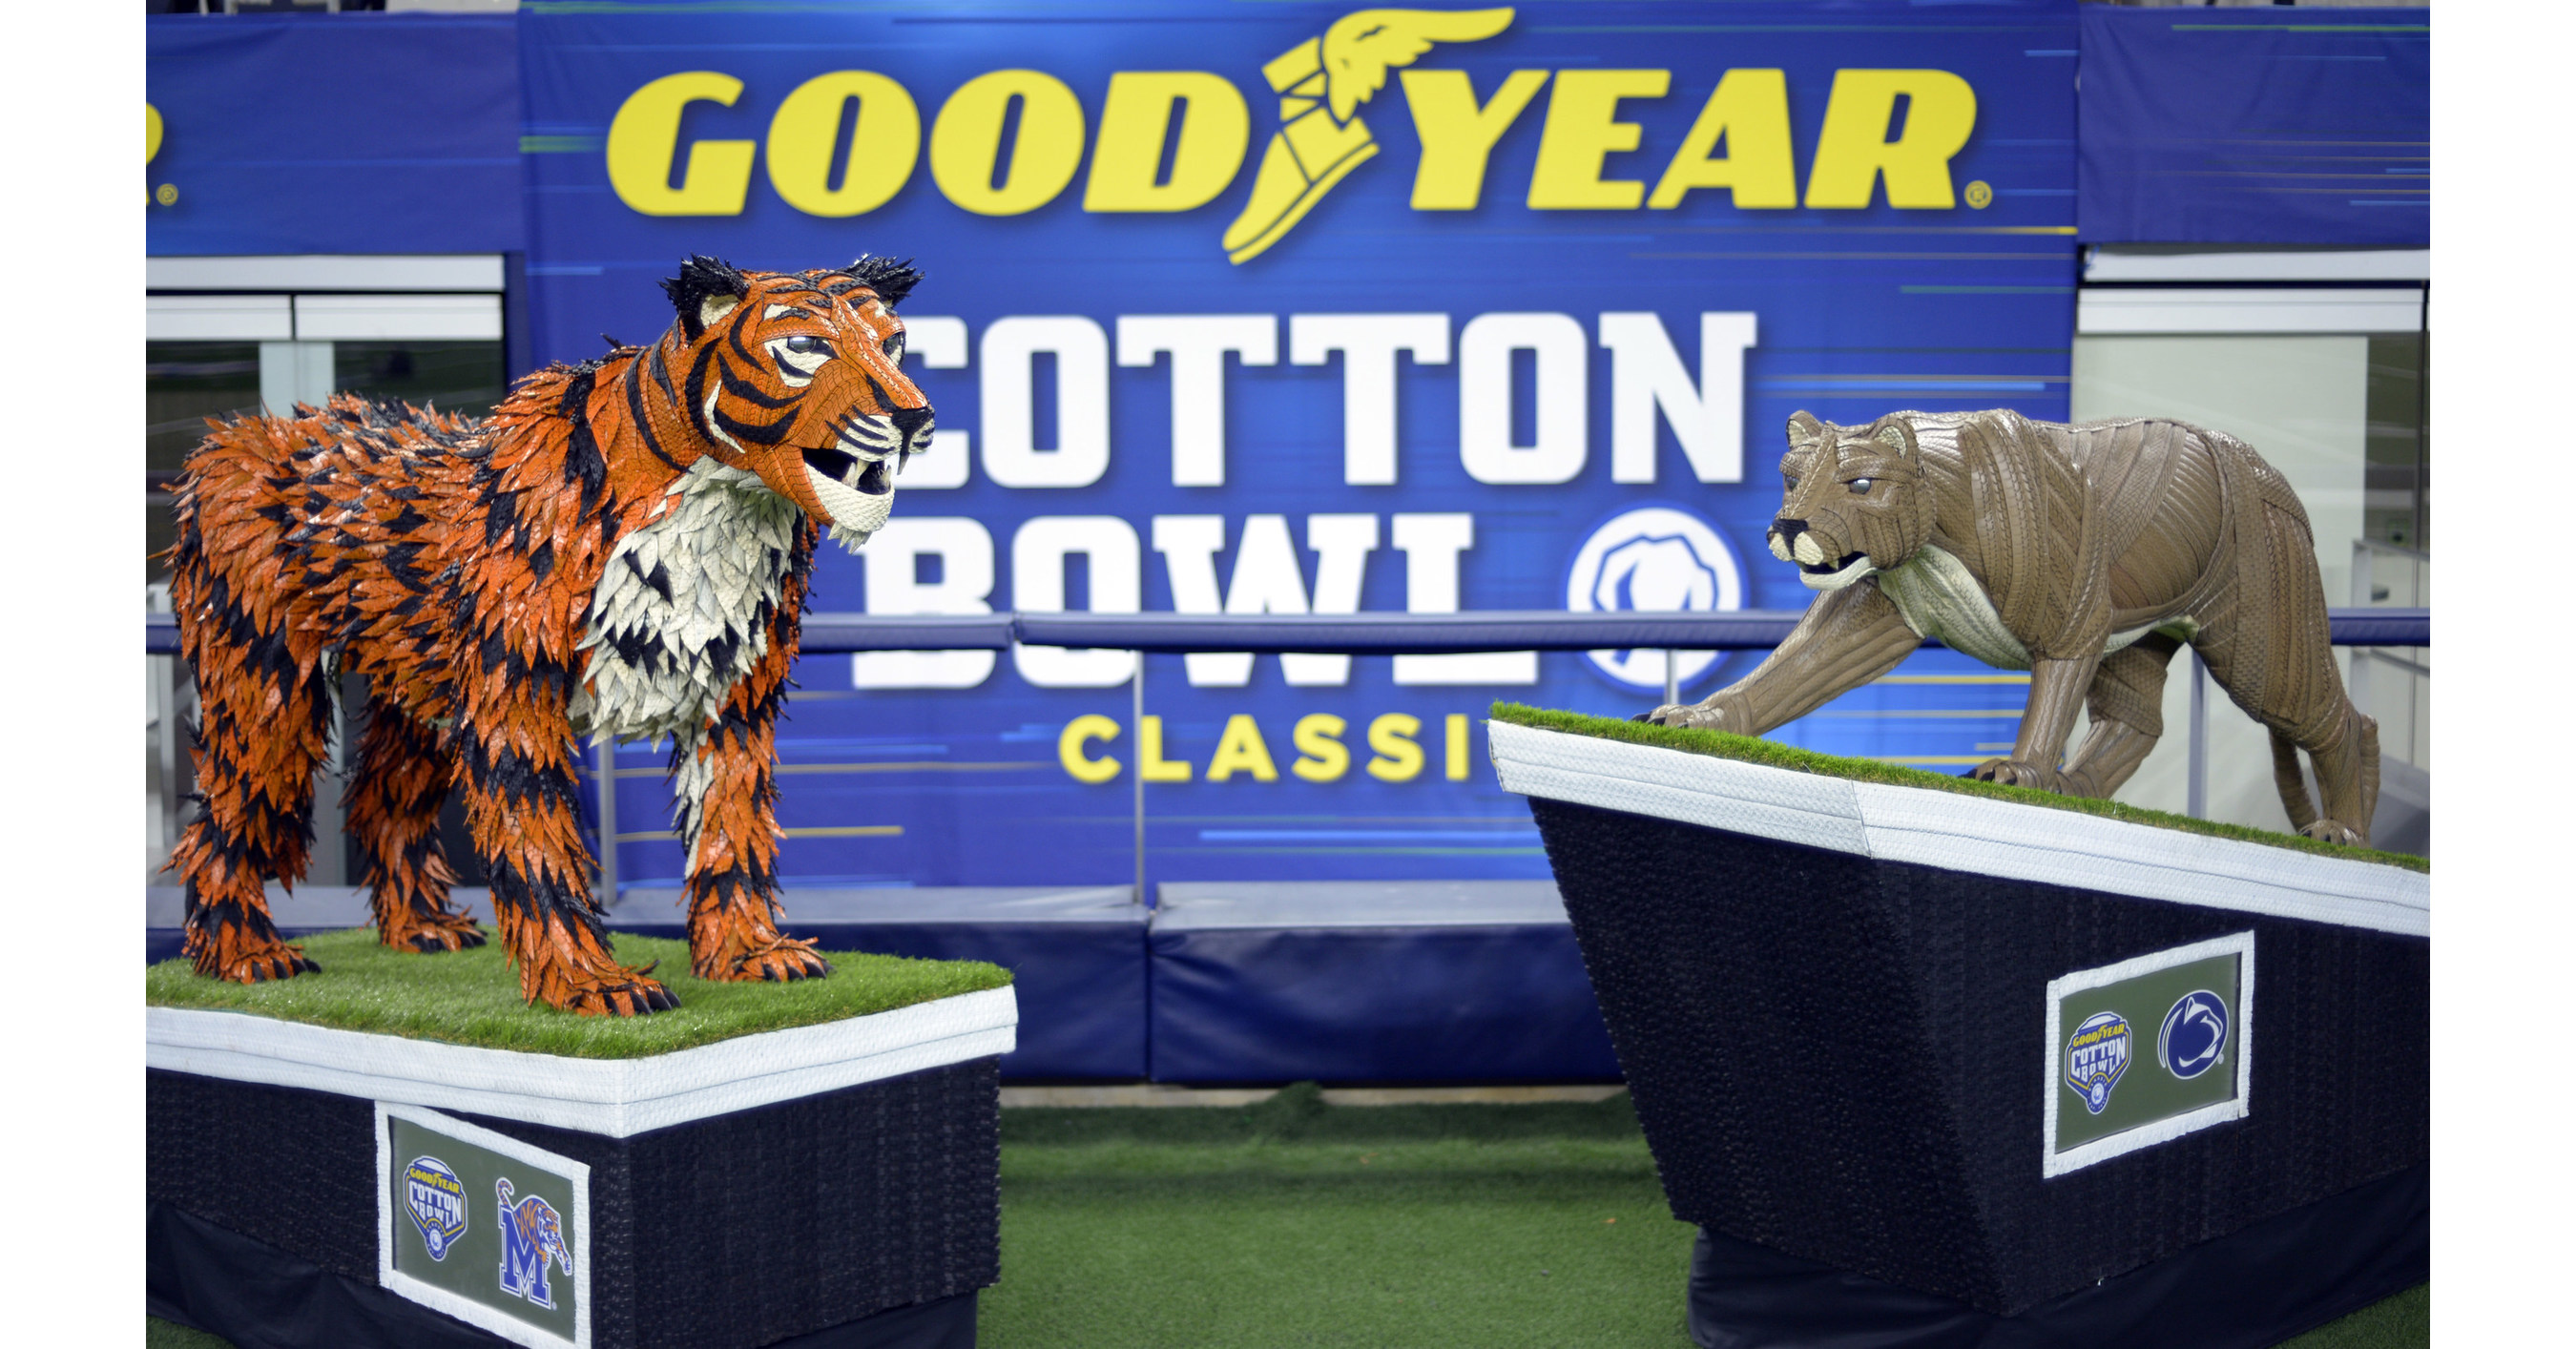 Green Wave tire mascot will be a souvenir of historic Cotton Bowl win